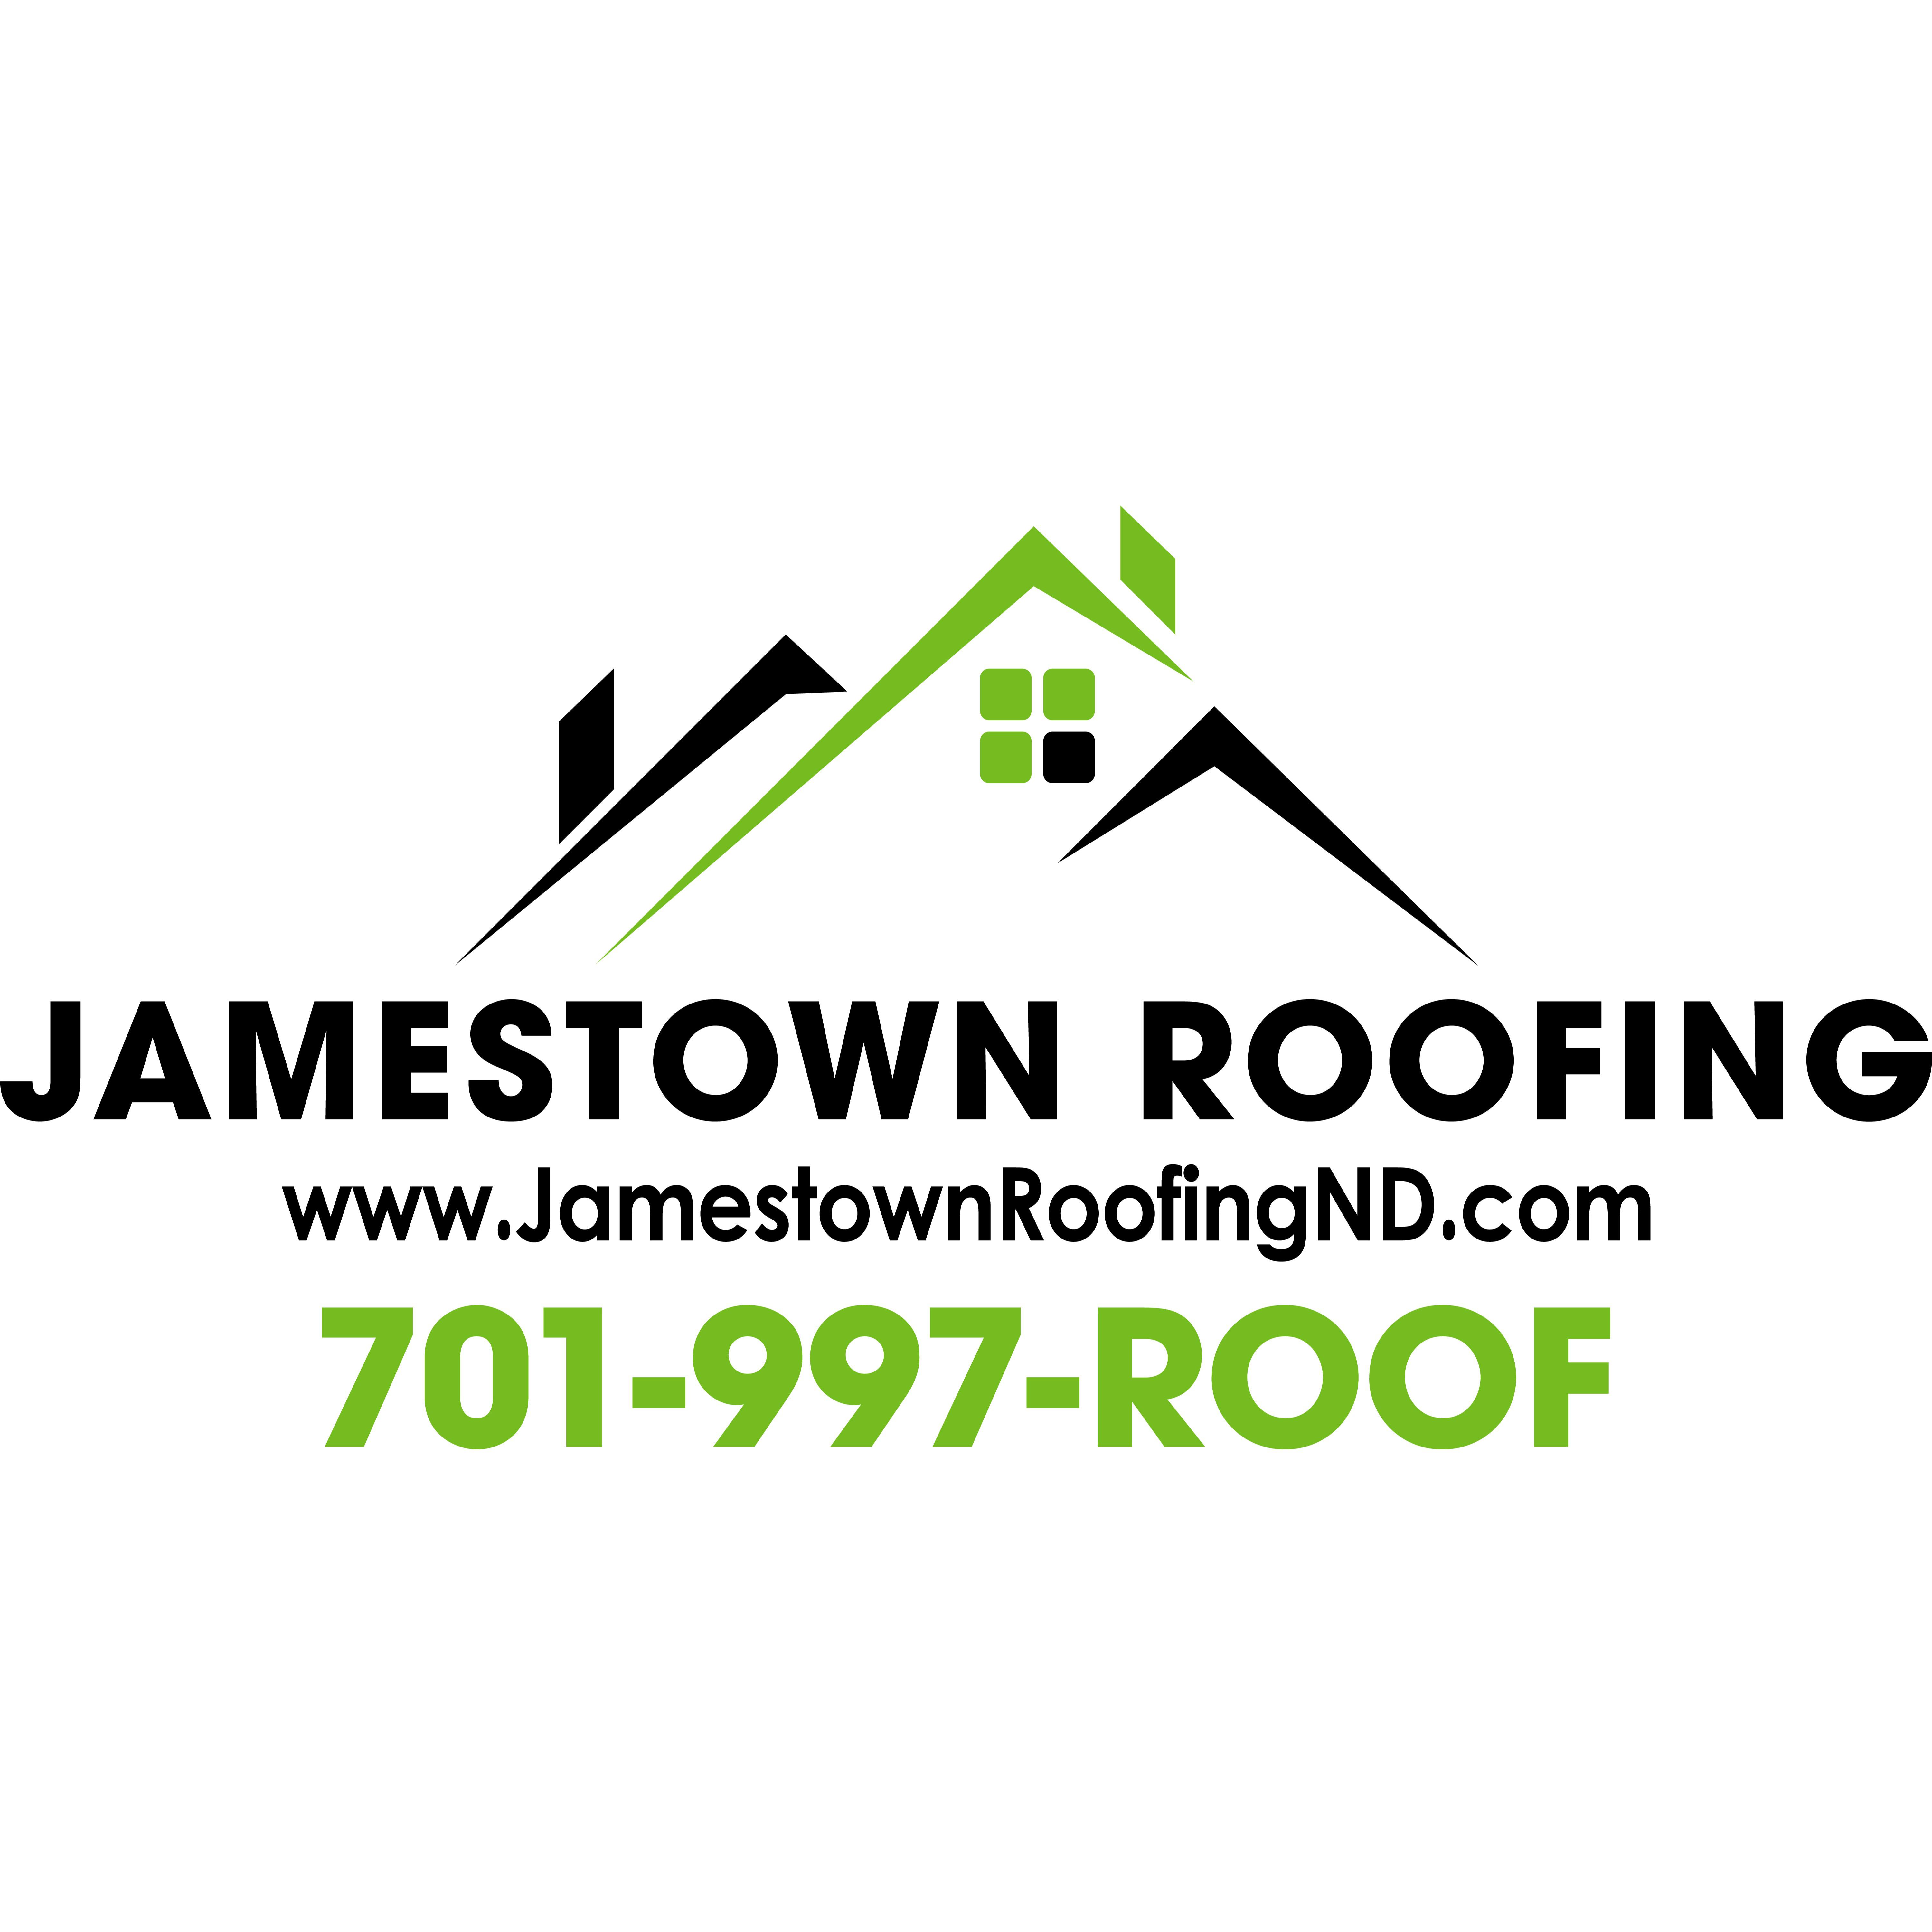 Jamestown Roofing - Jamestown, ND 58401 - (701)997-7663 | ShowMeLocal.com